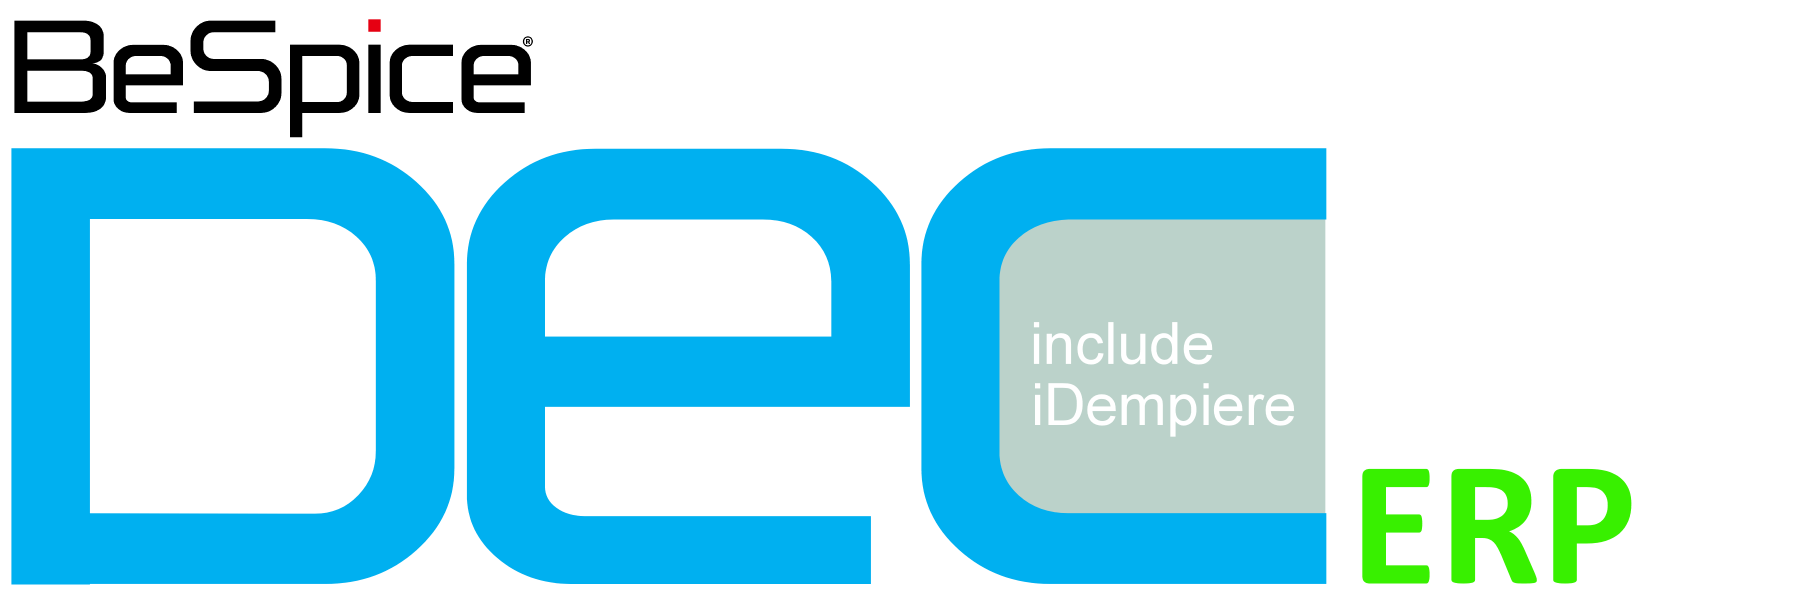 BeSpice DecERP include iDempiere